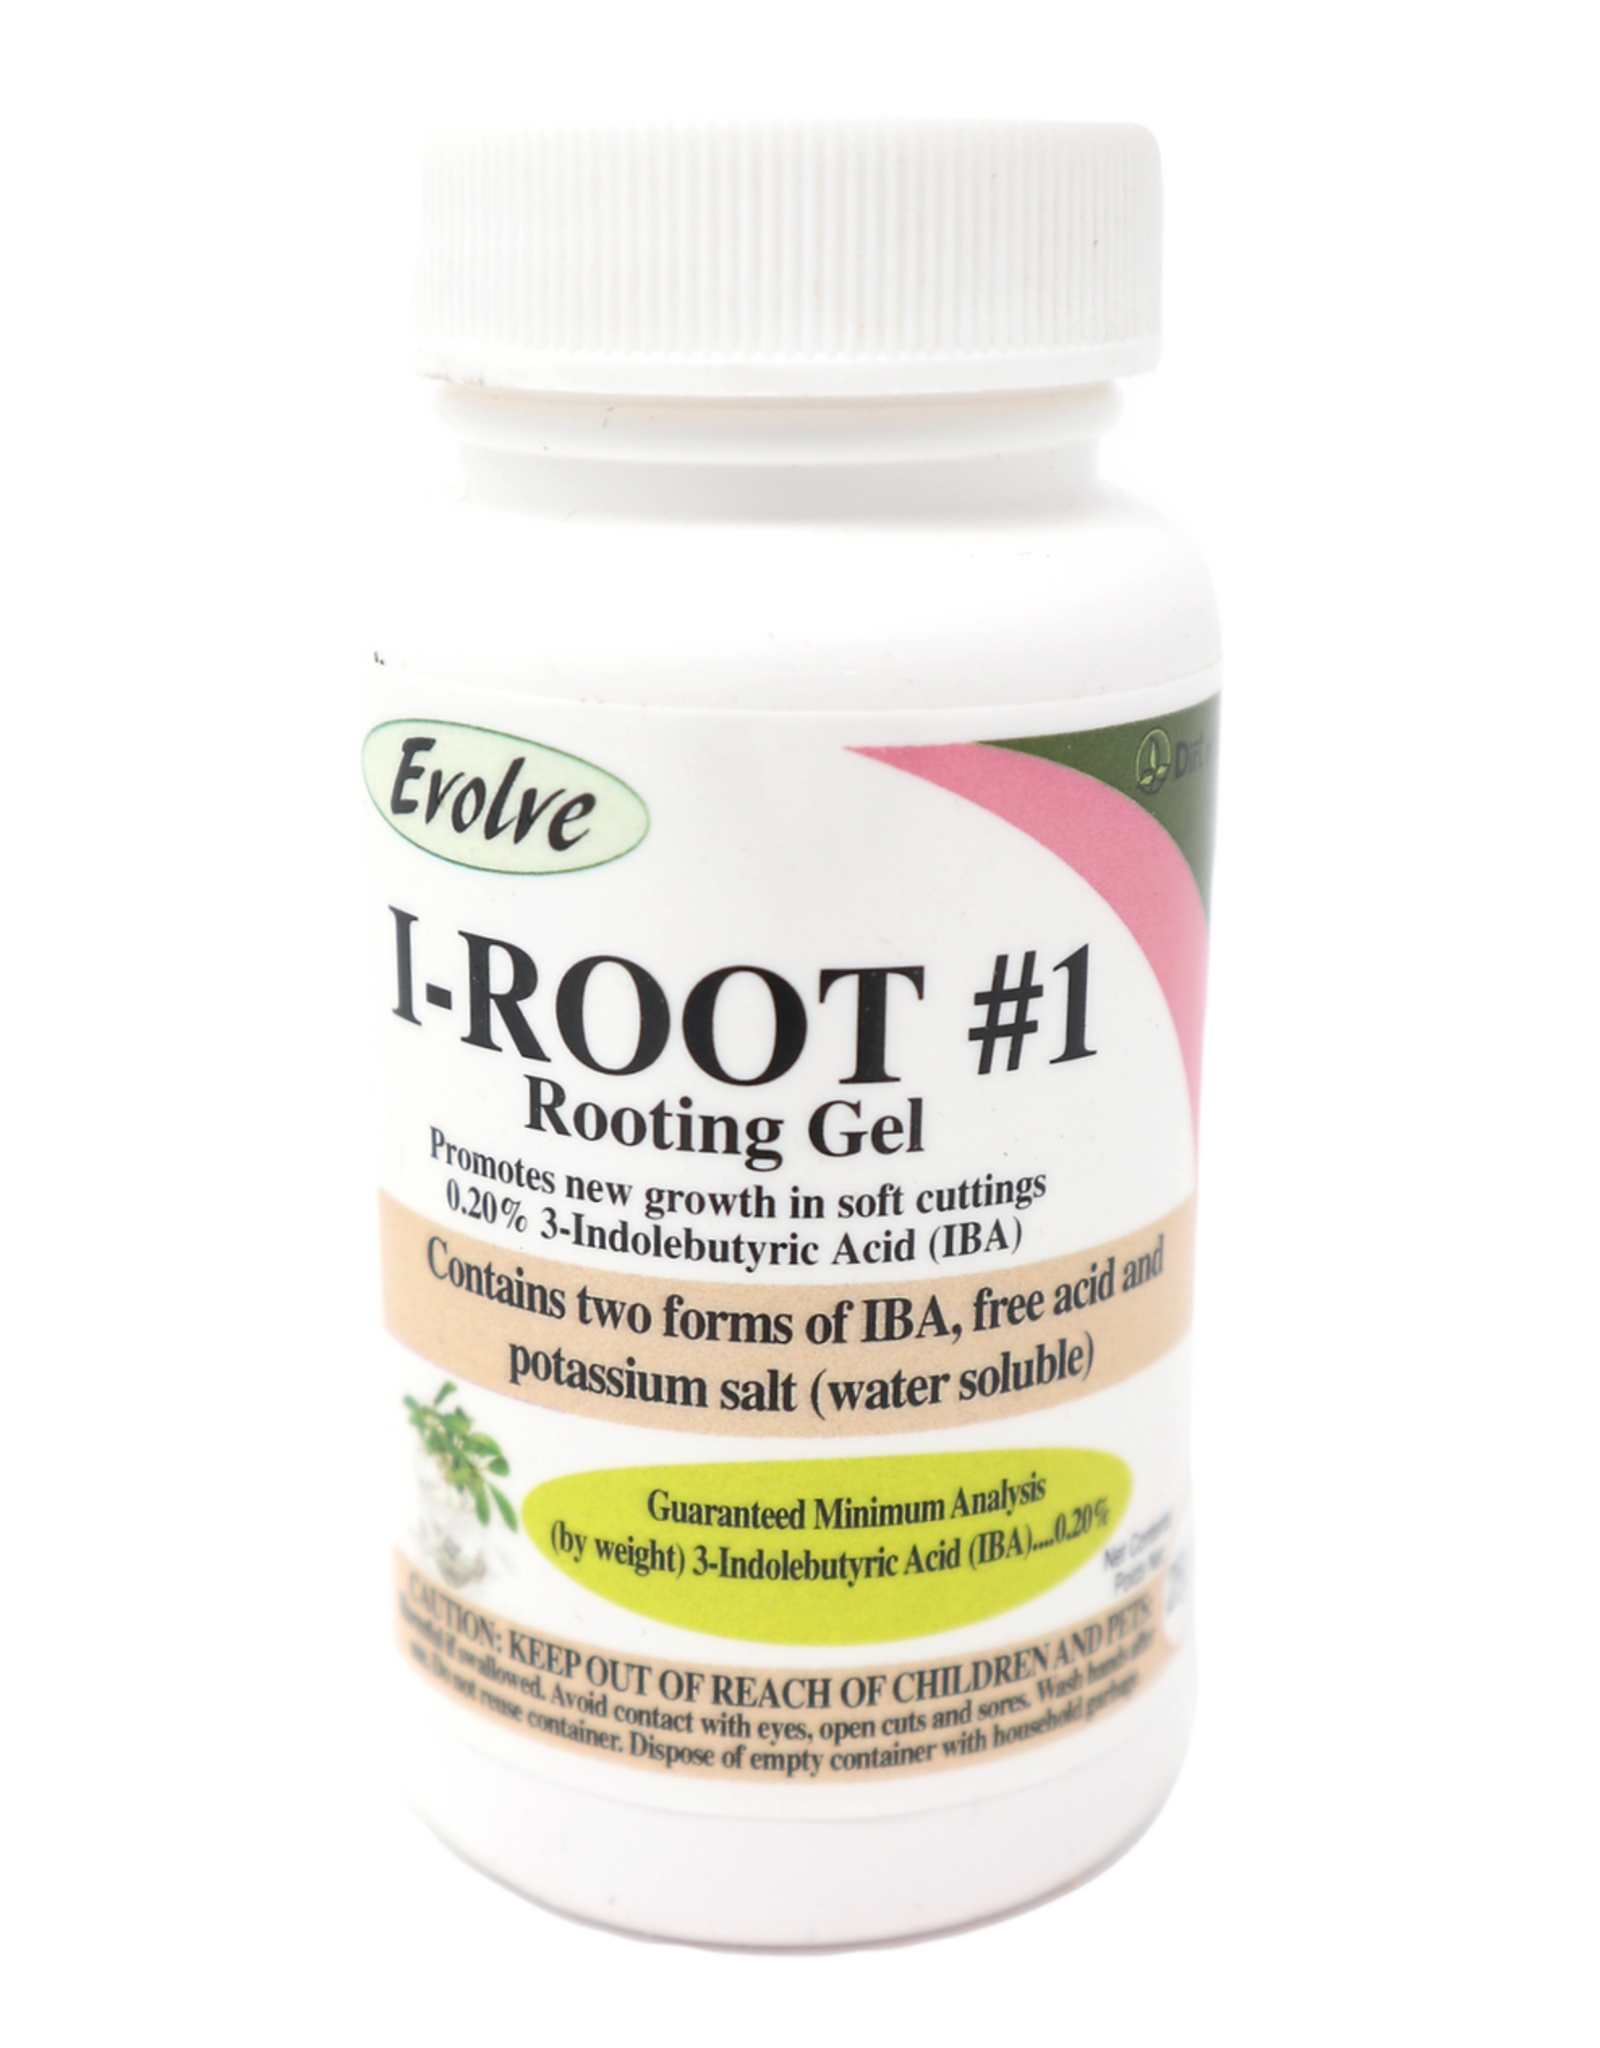 Evolve I-ROOT #1 Rooting Gel - Soft